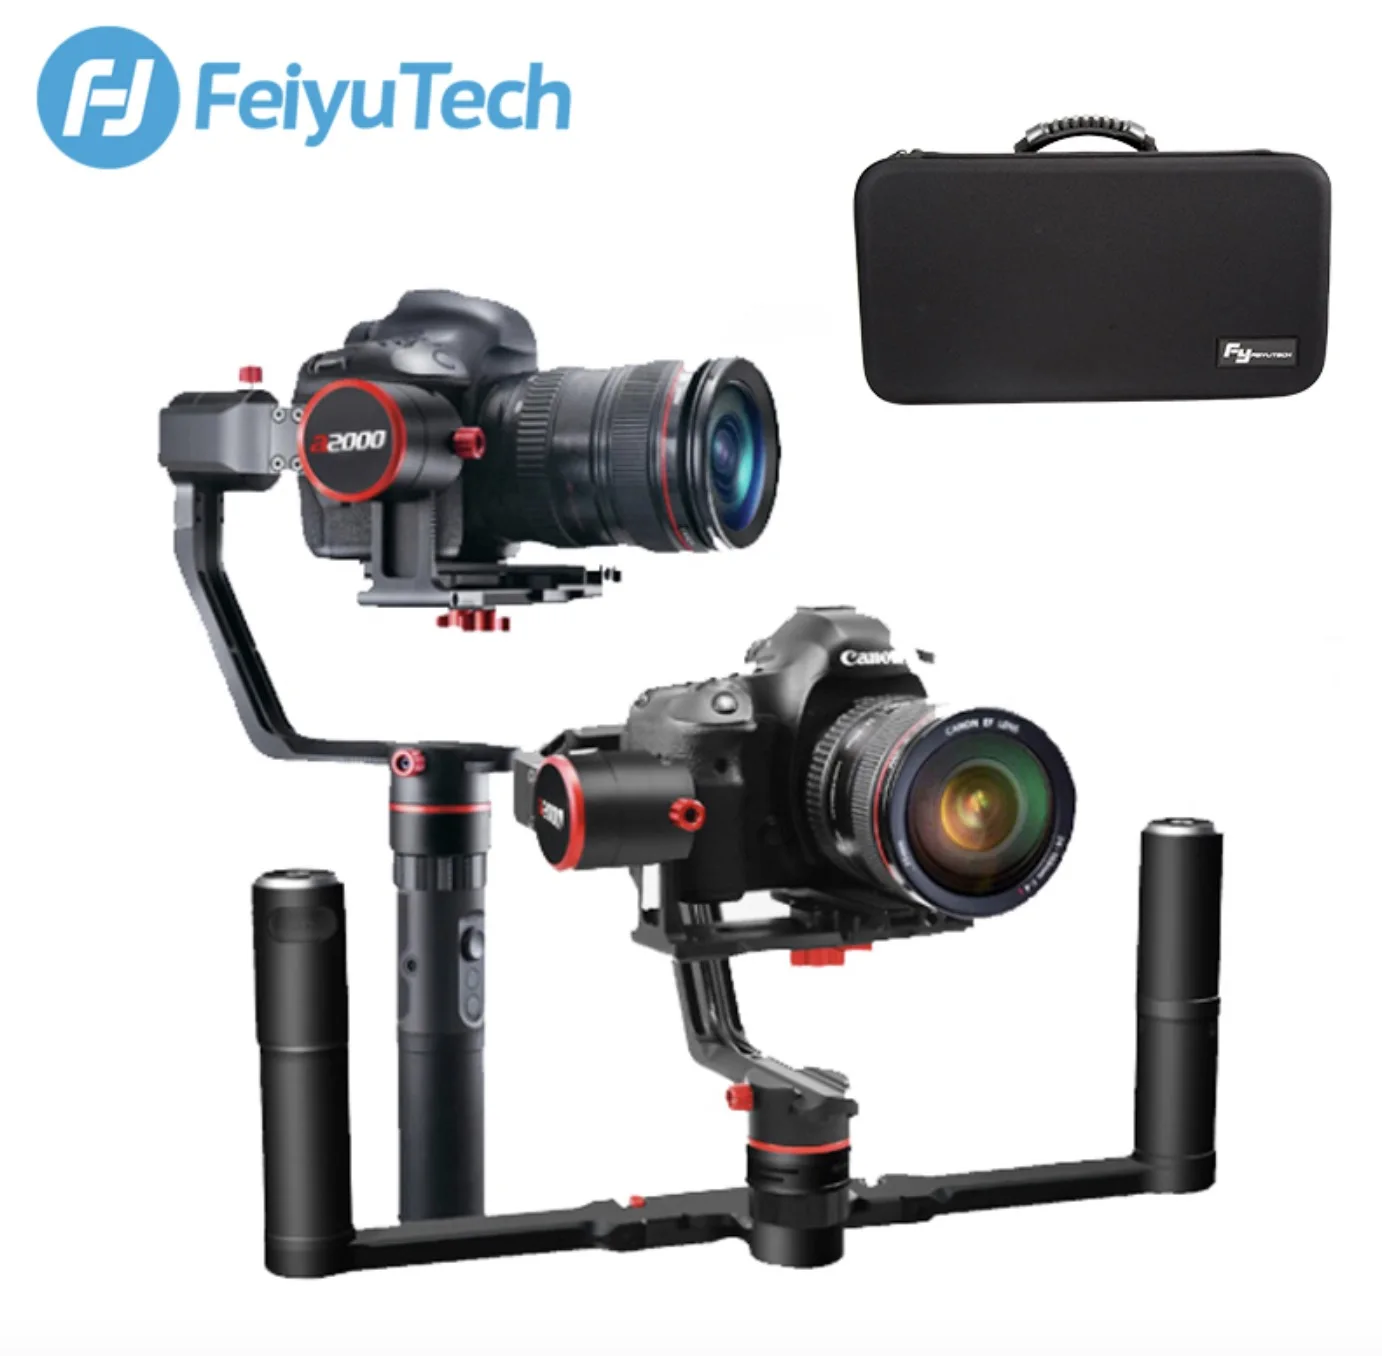 Feiyutech A2000 3 Axis Gimbal Dslr Camera Stabilizer Dual Single 